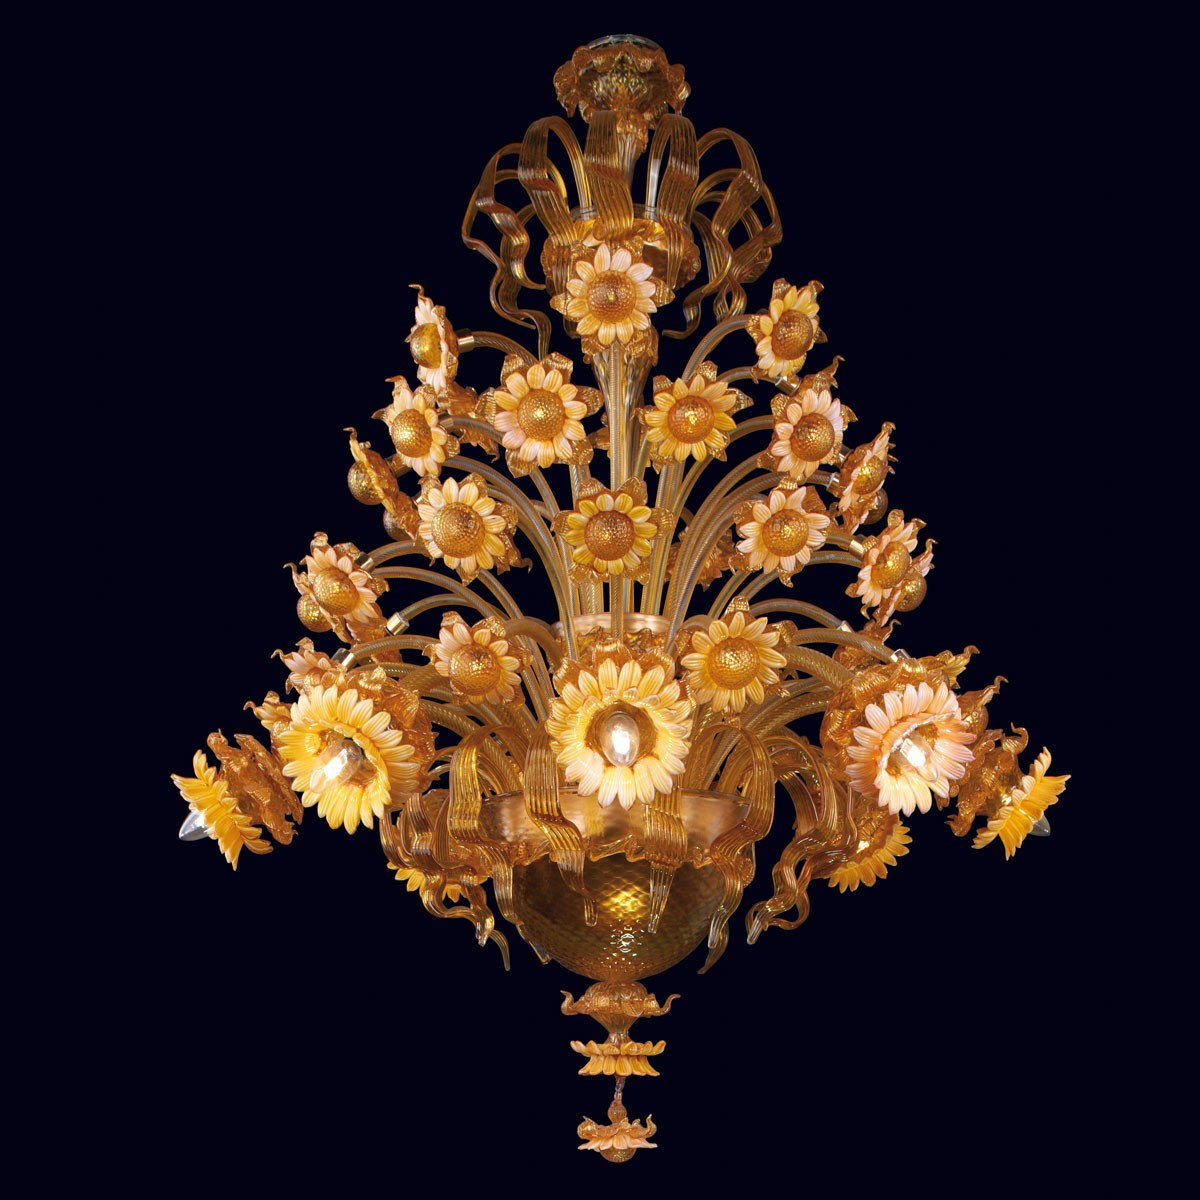 "Daisy" Murano glass chandelier - 8 + 24 lights